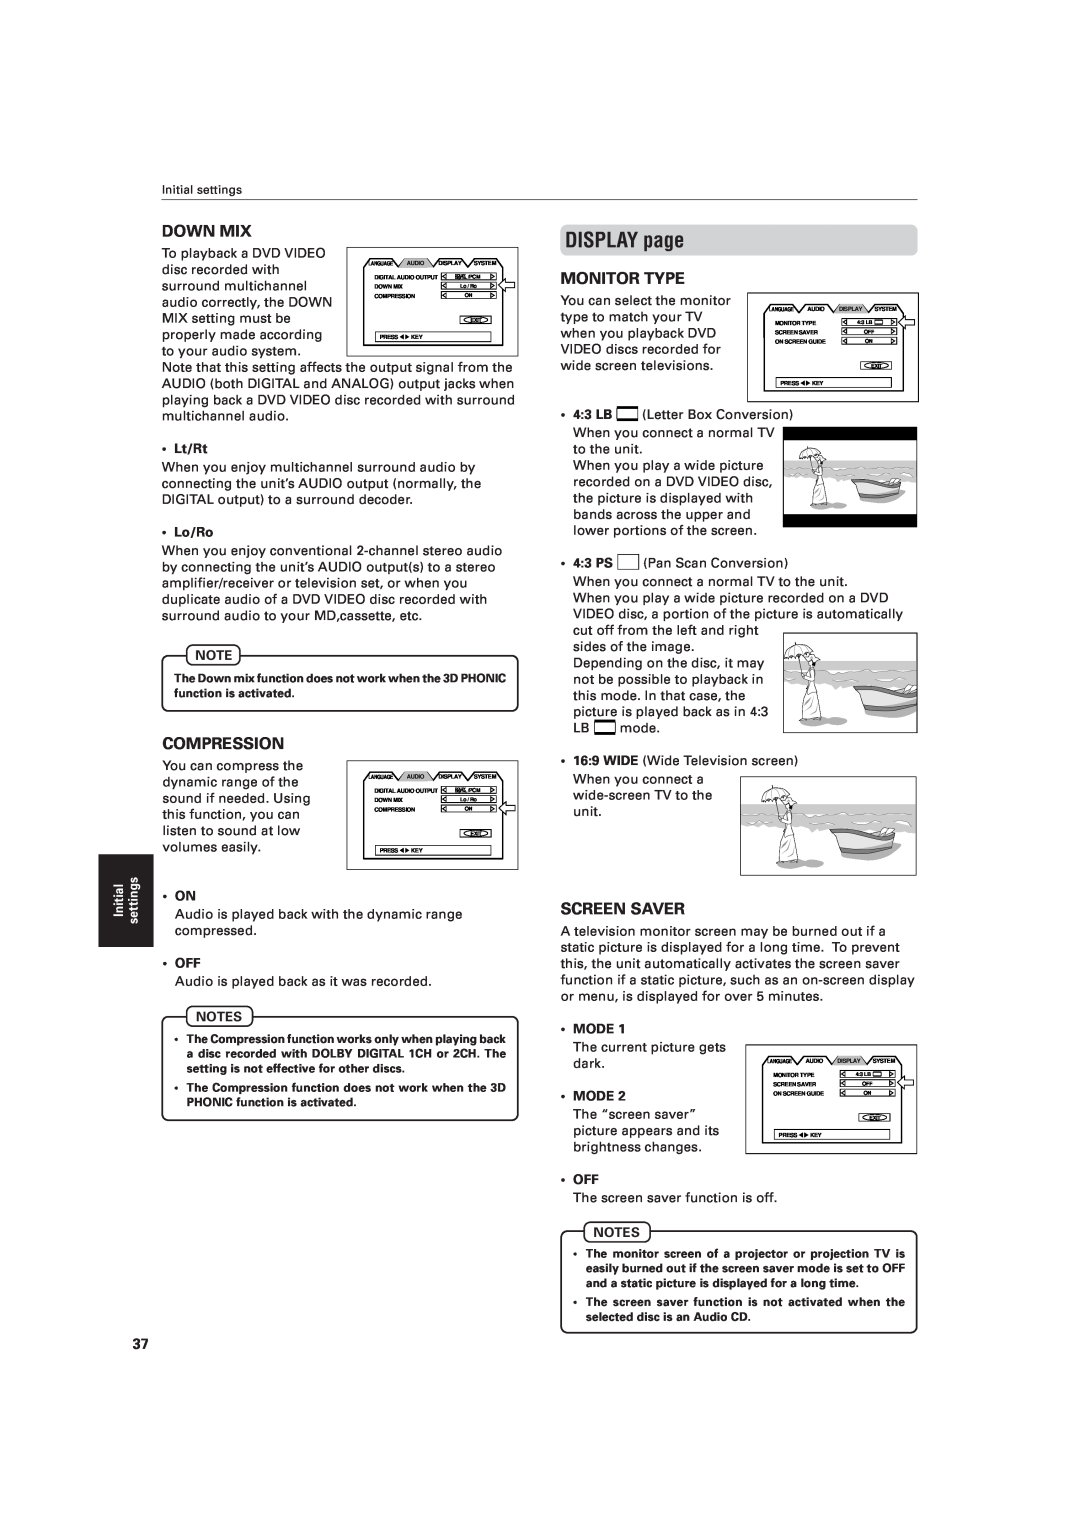 JVC XV-521BK manual DISPLAY page, Down Mix, Monitor Type, Compression, Screen Saver 